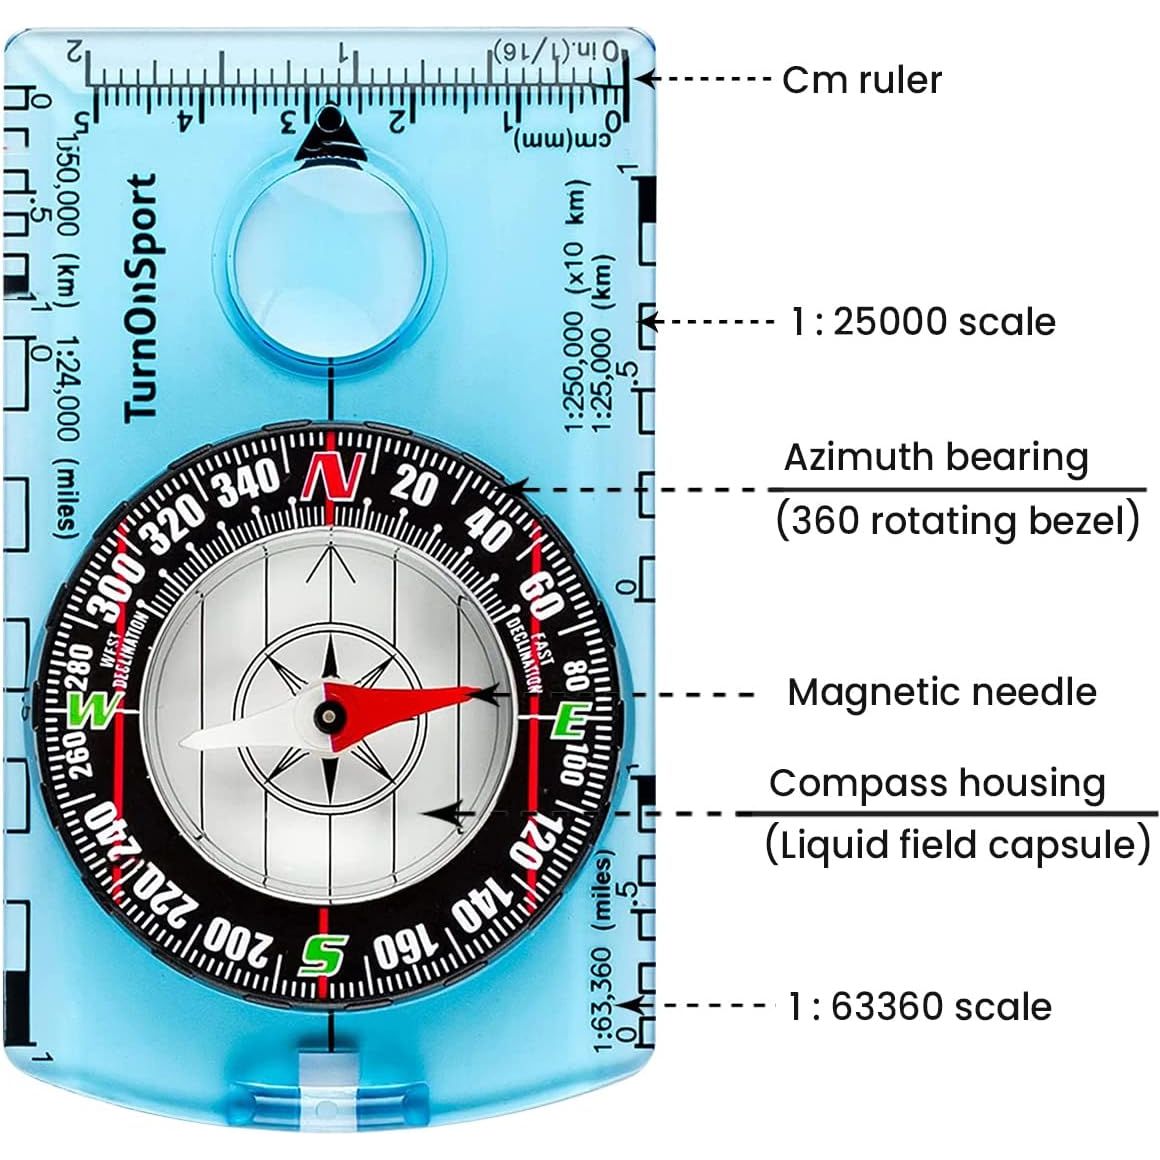 Professional Field Navigation Scout Compass